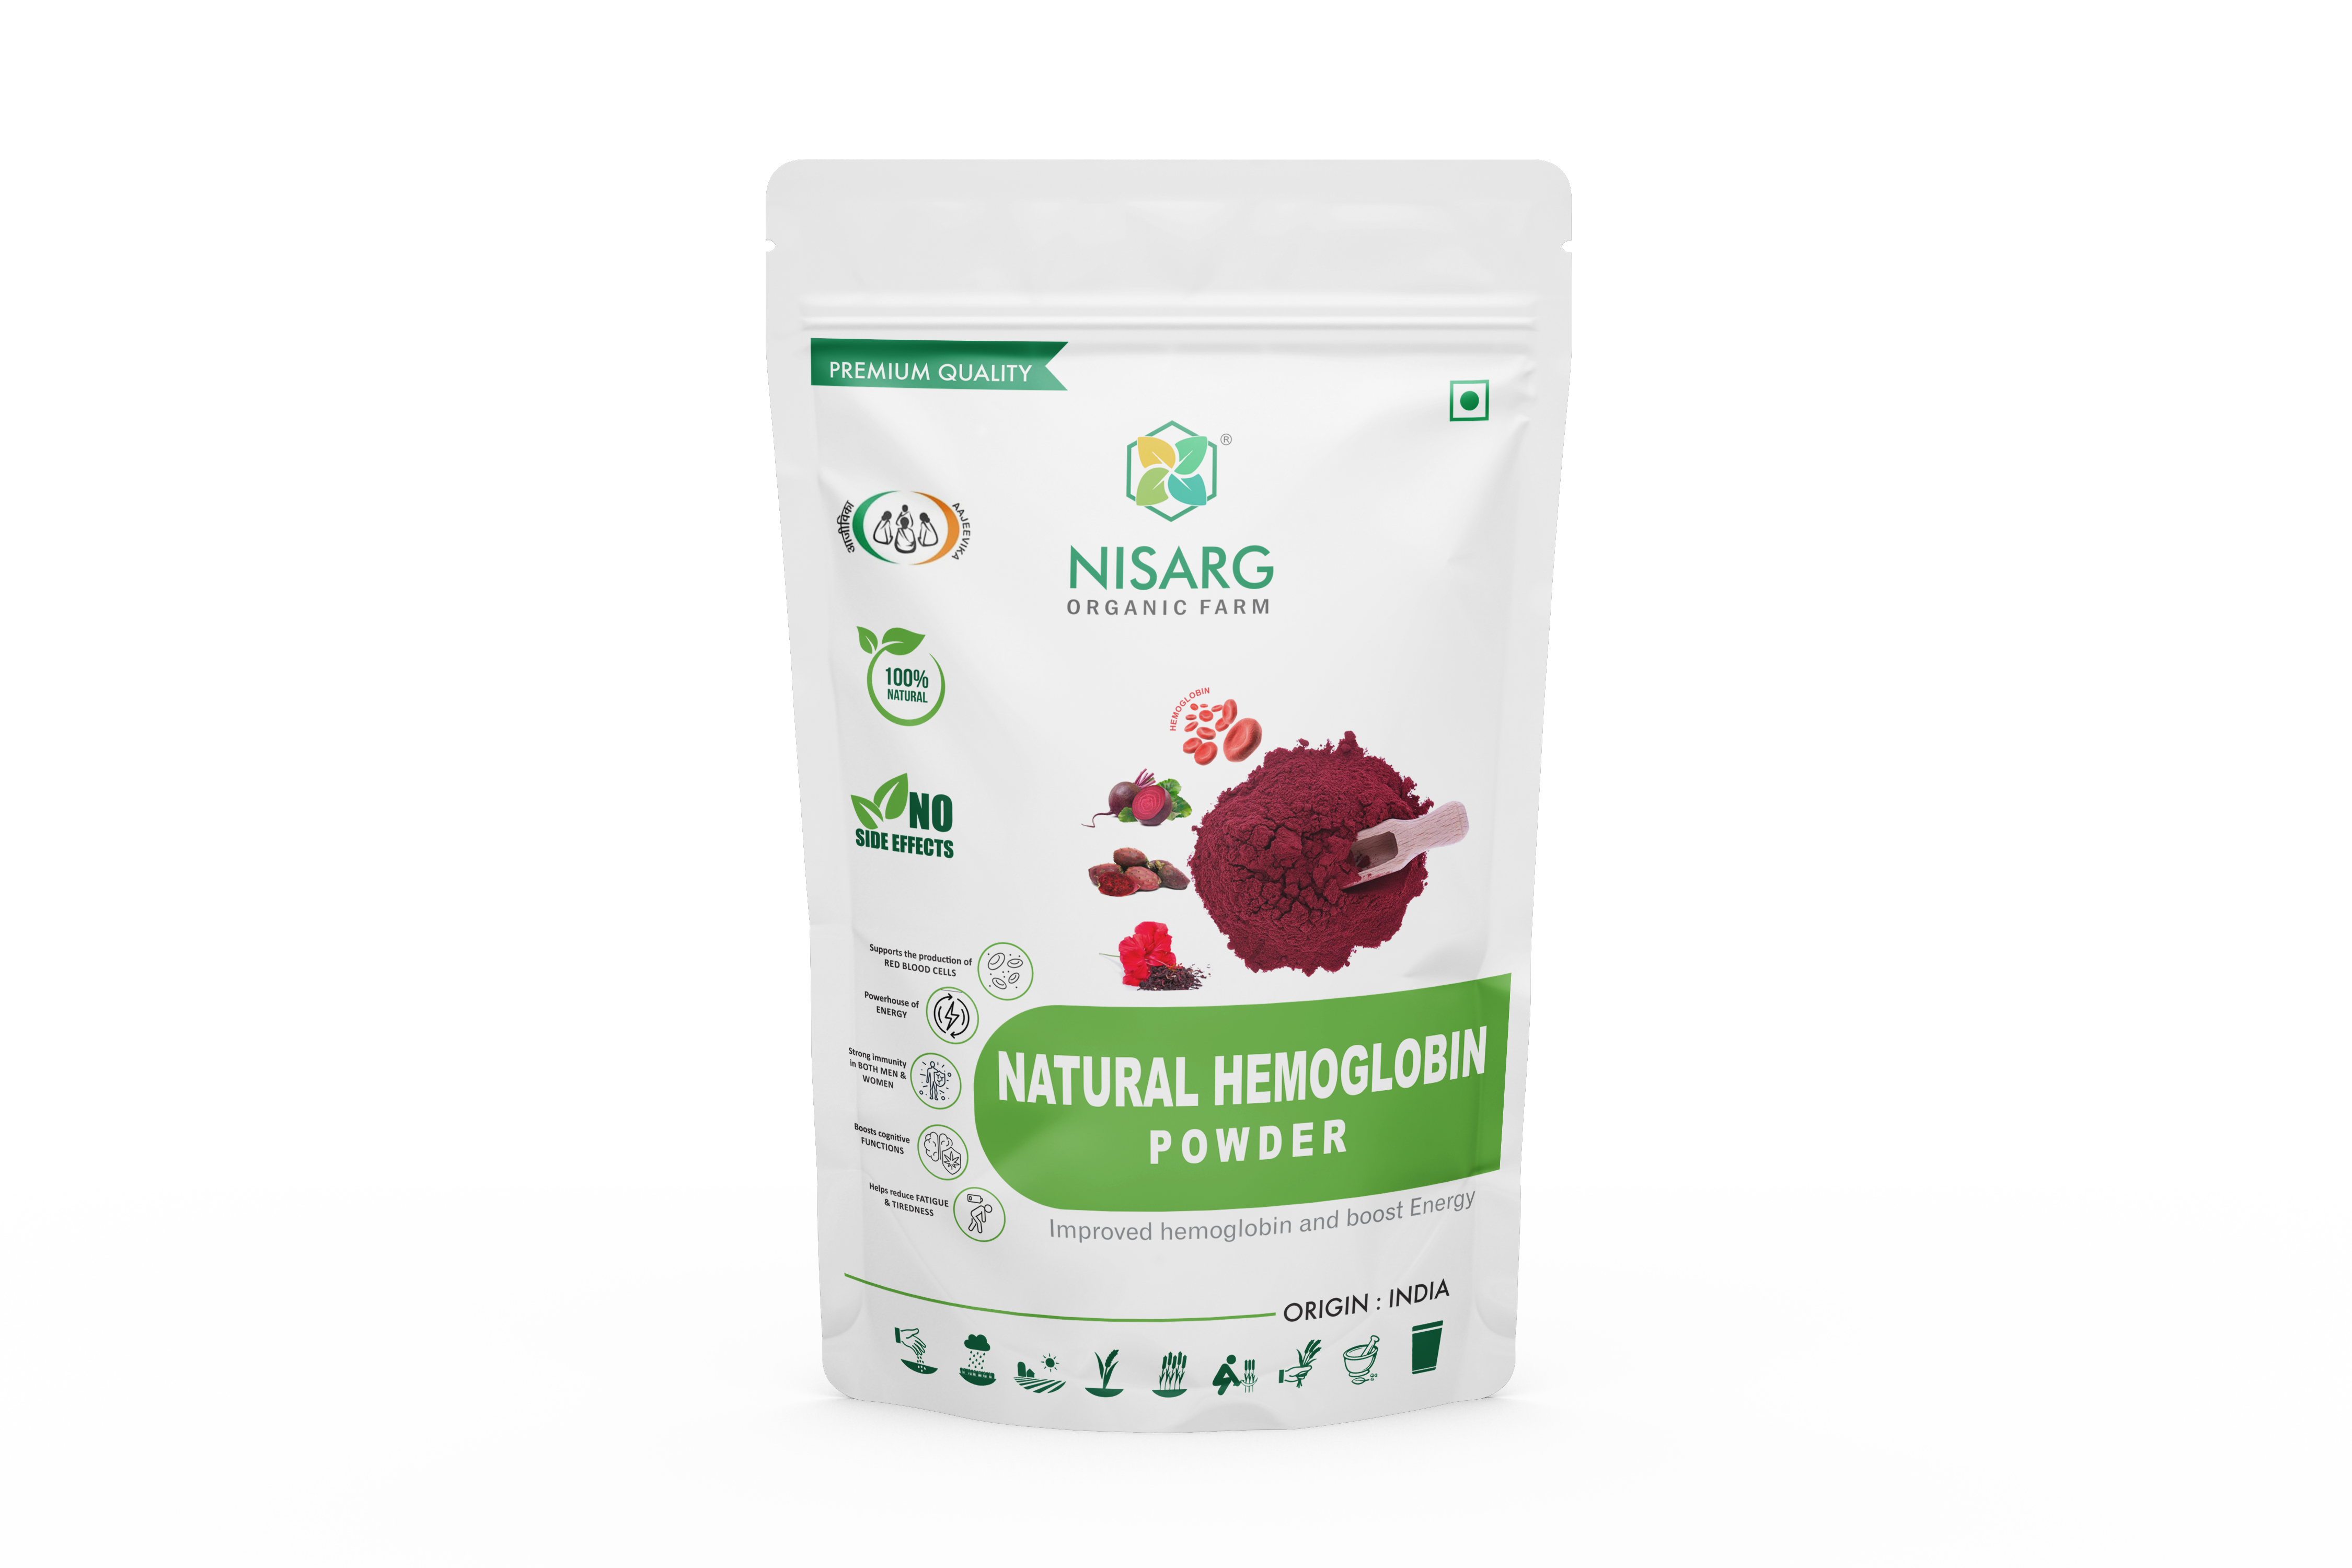 Nisarg Organic Farm Natural Hemoglobin Powder